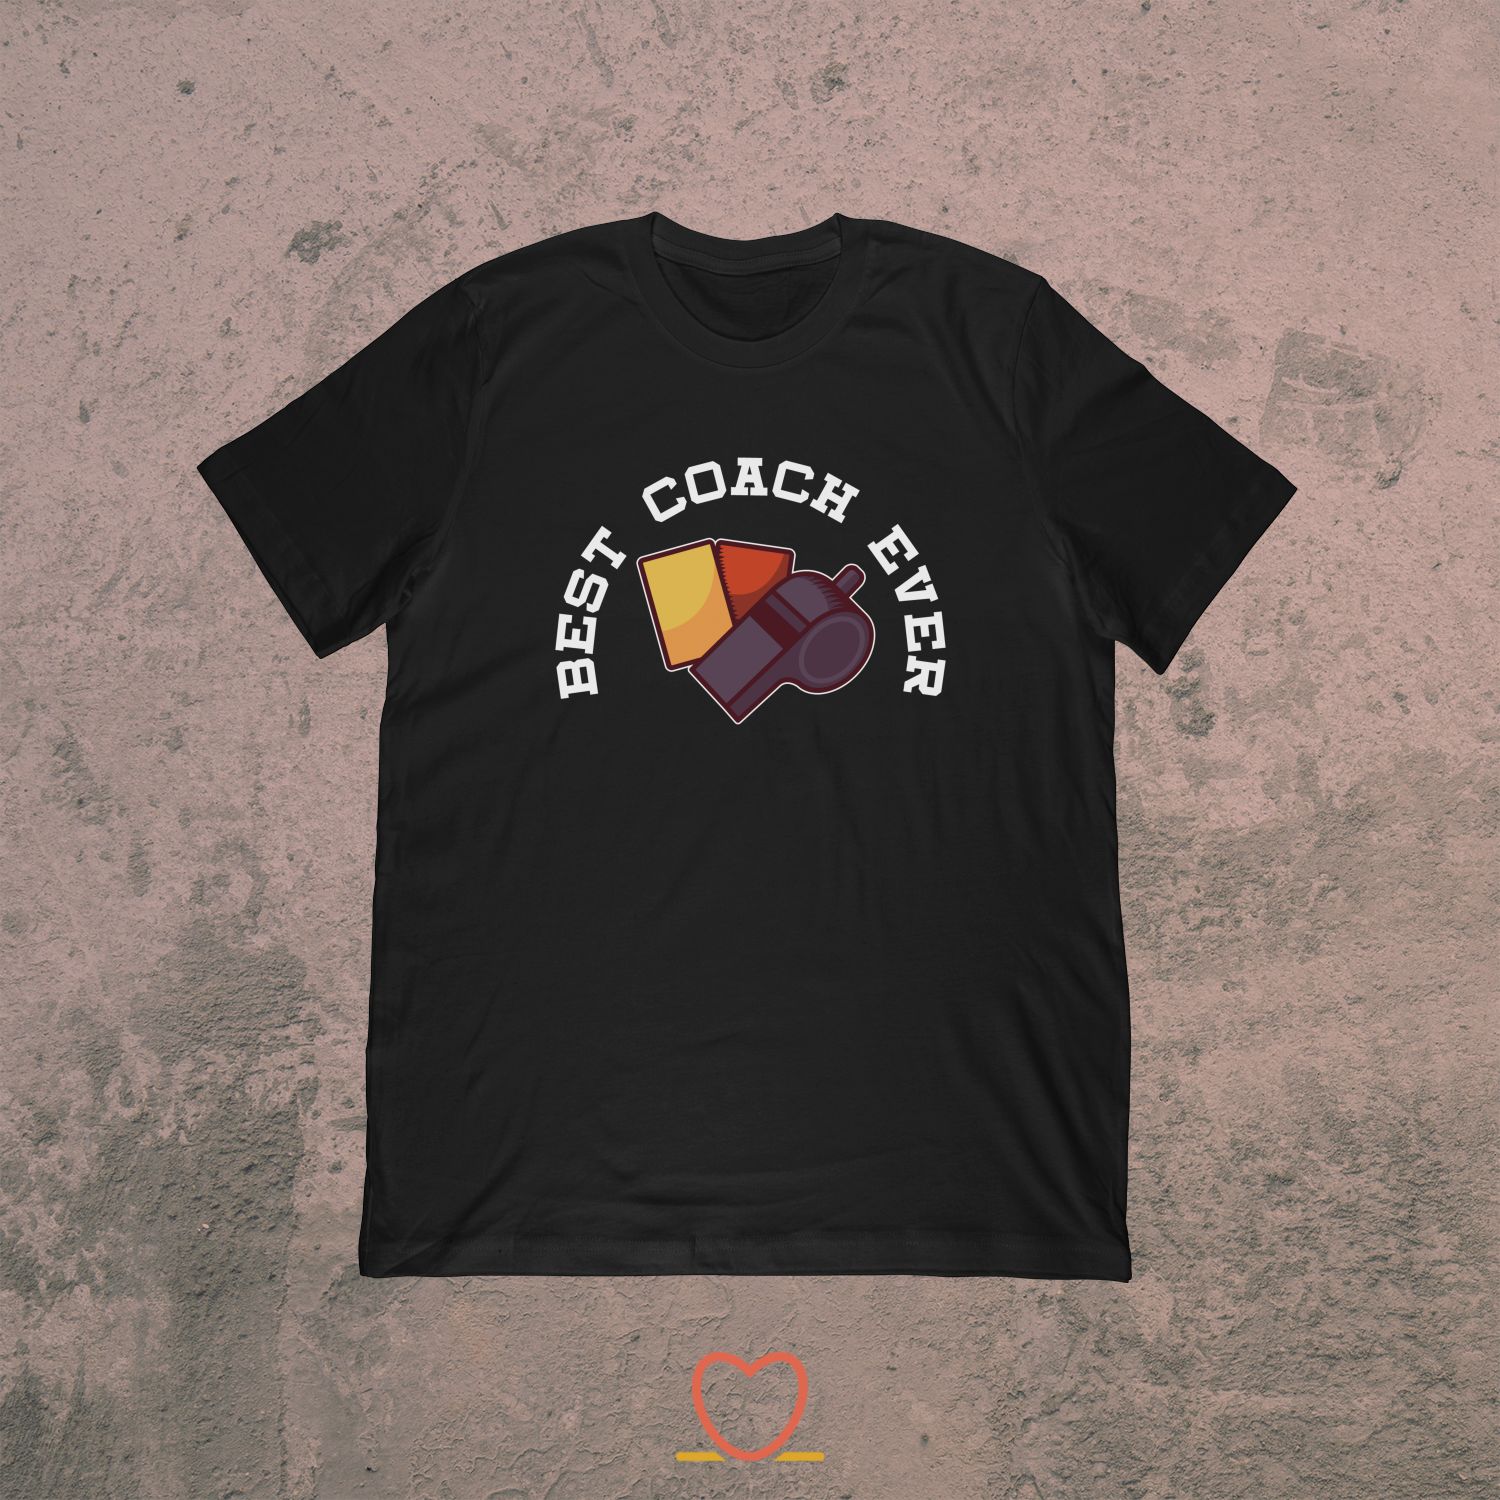 Best Coach Ever – Soccer Coach Tee